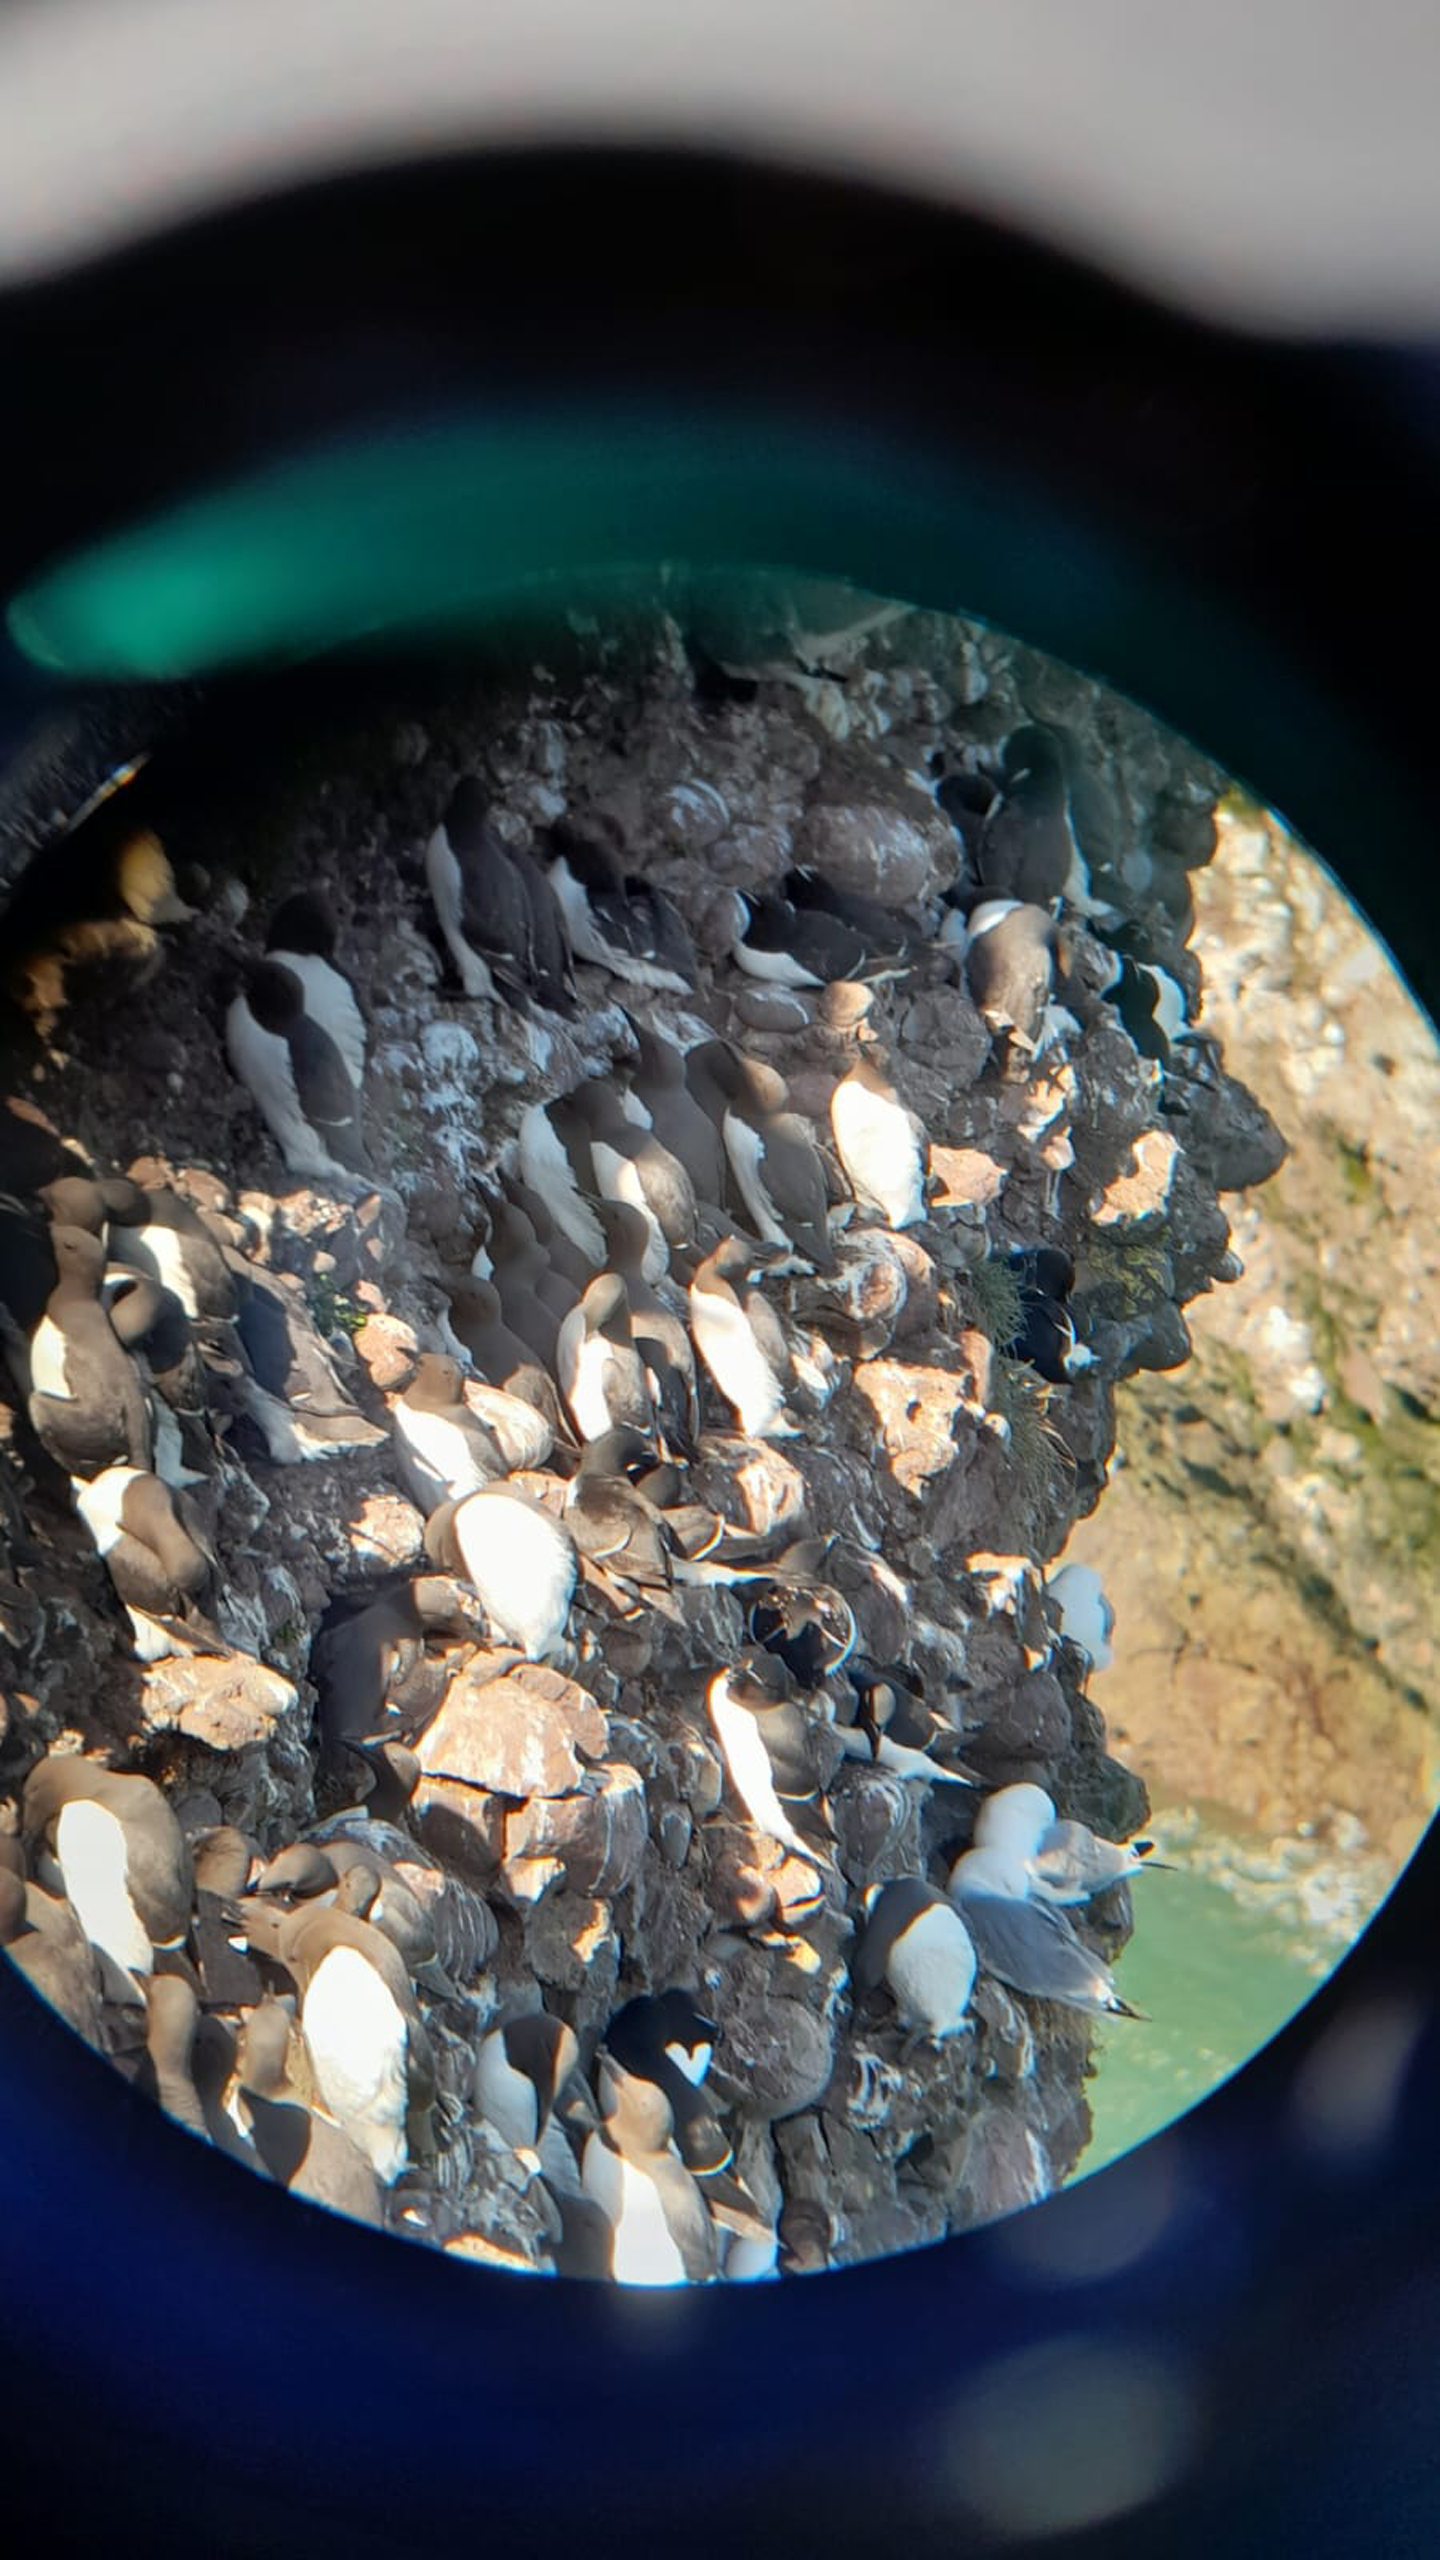 A view through binoculars of seabirds at Fowlsheugh, including guillemots and razorbills.